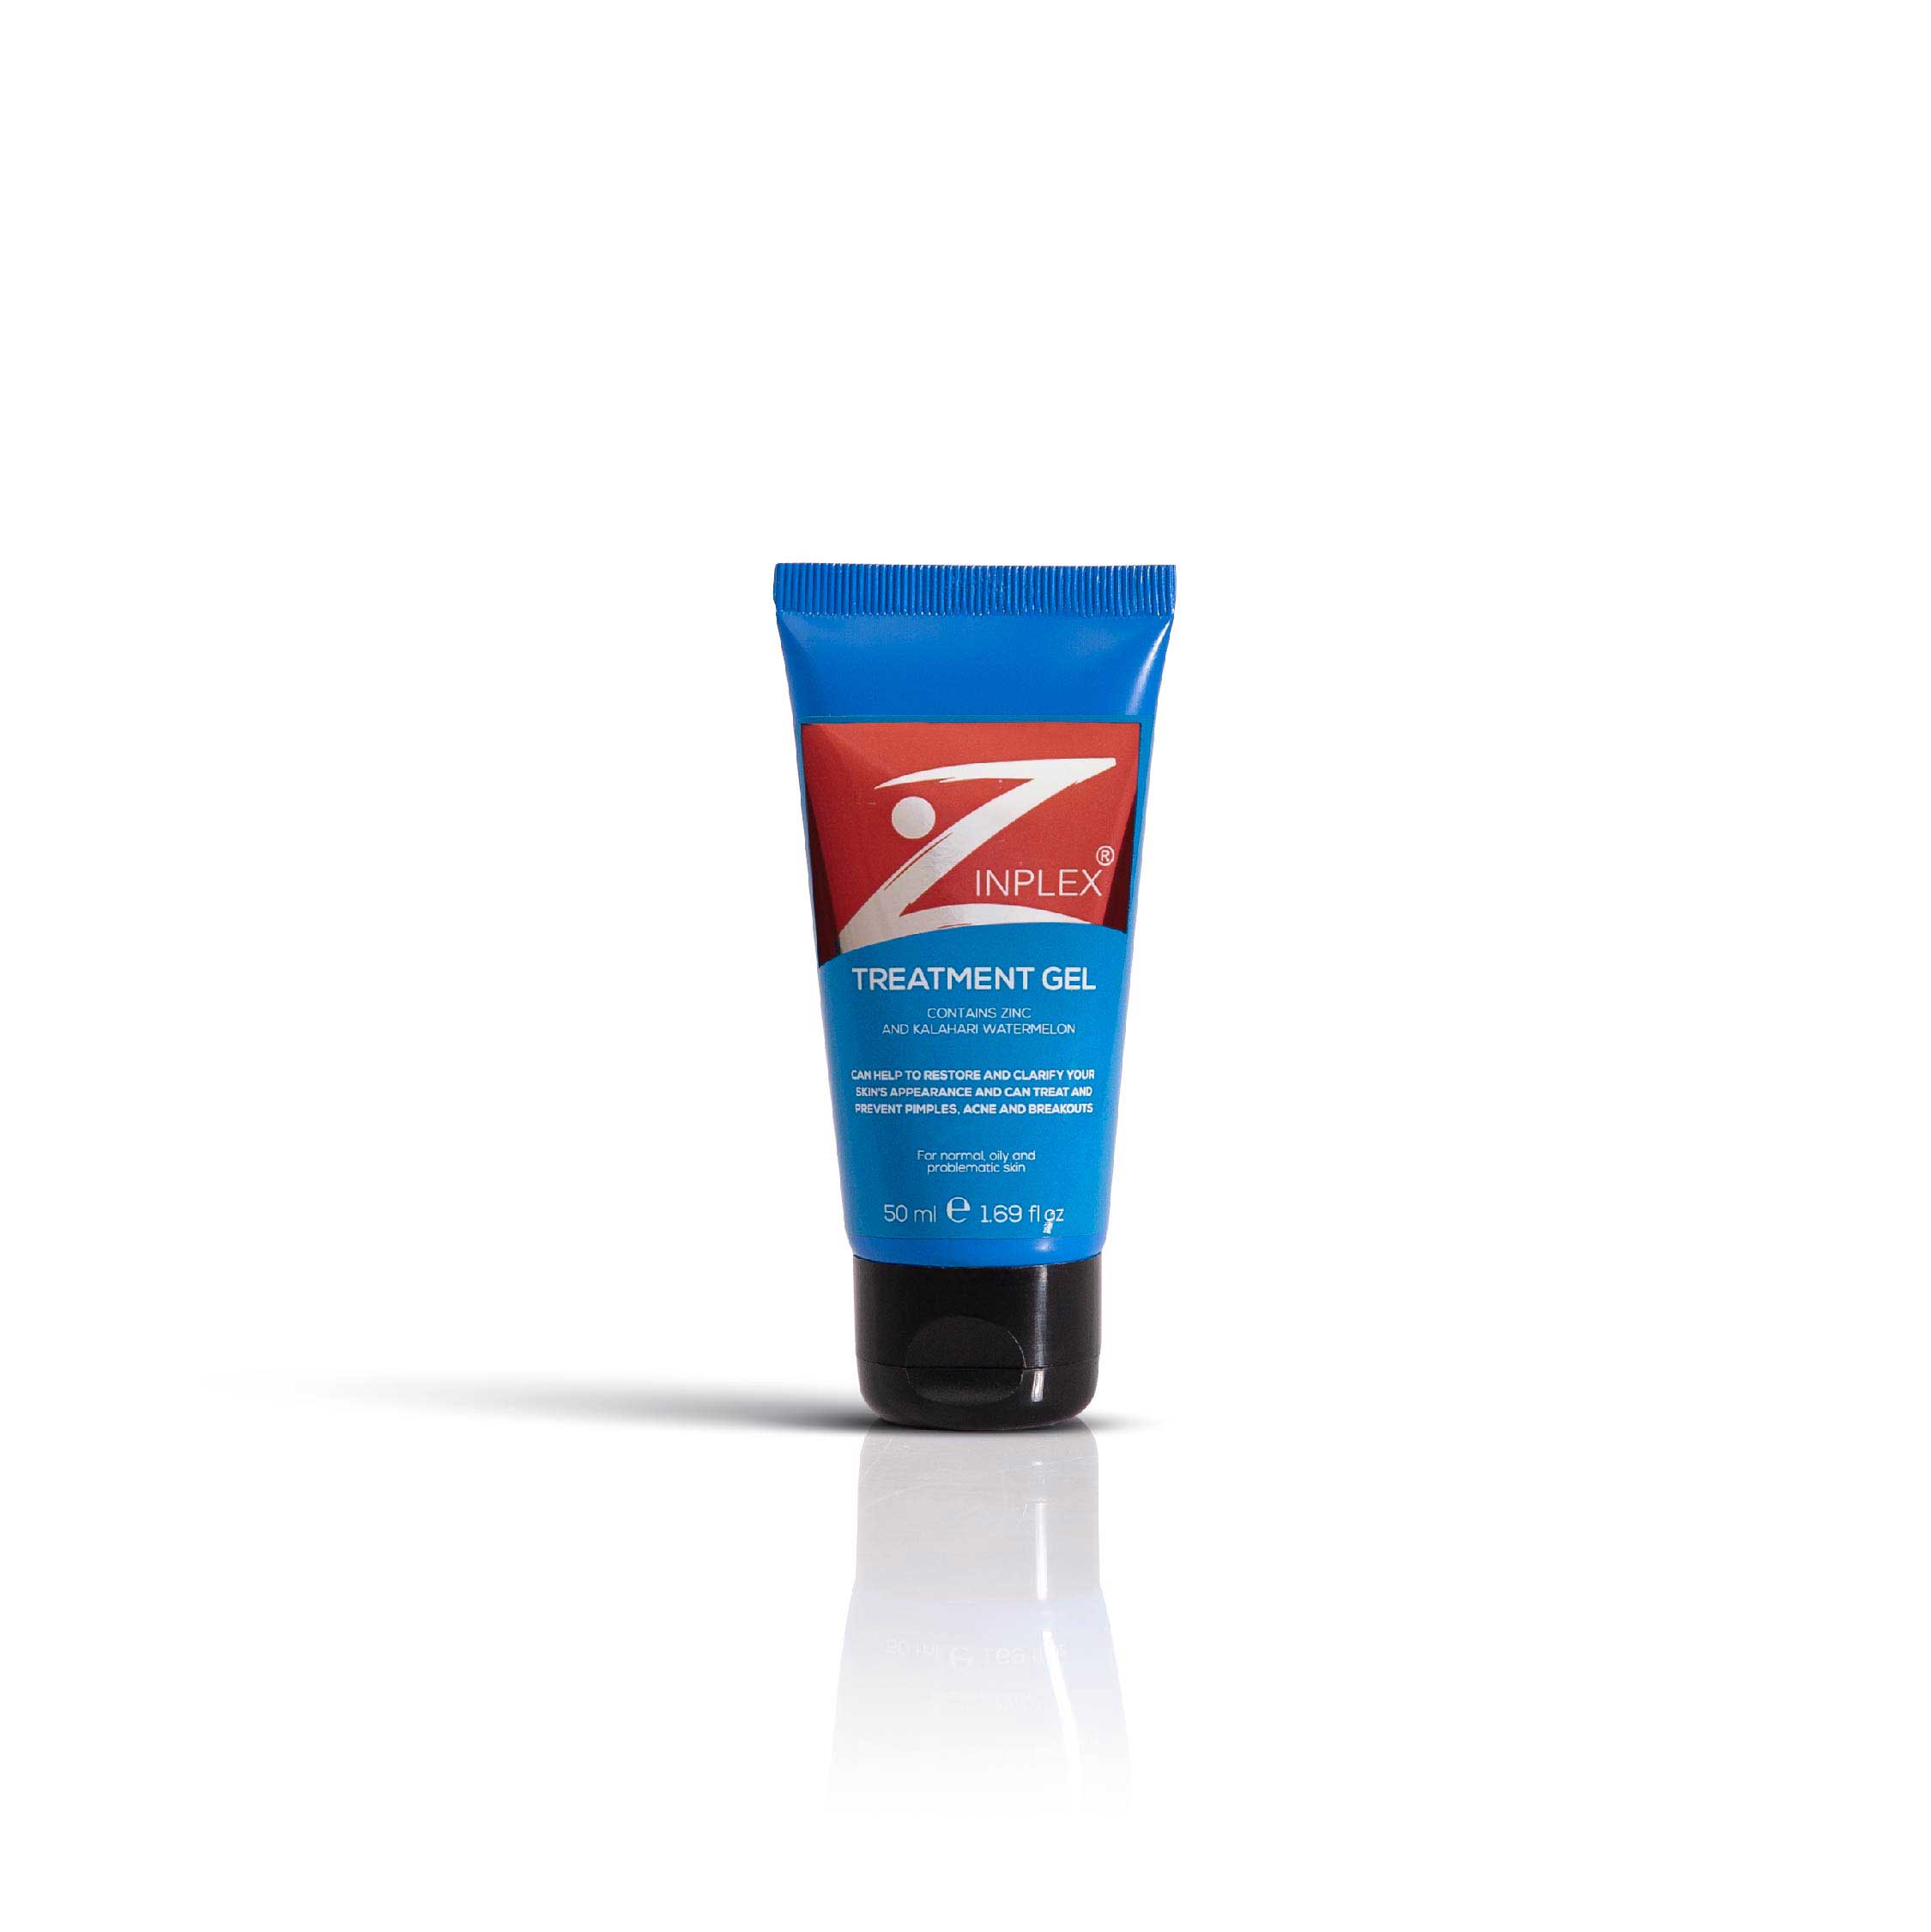 Zinplex Skin Treatment Gel, 50ml